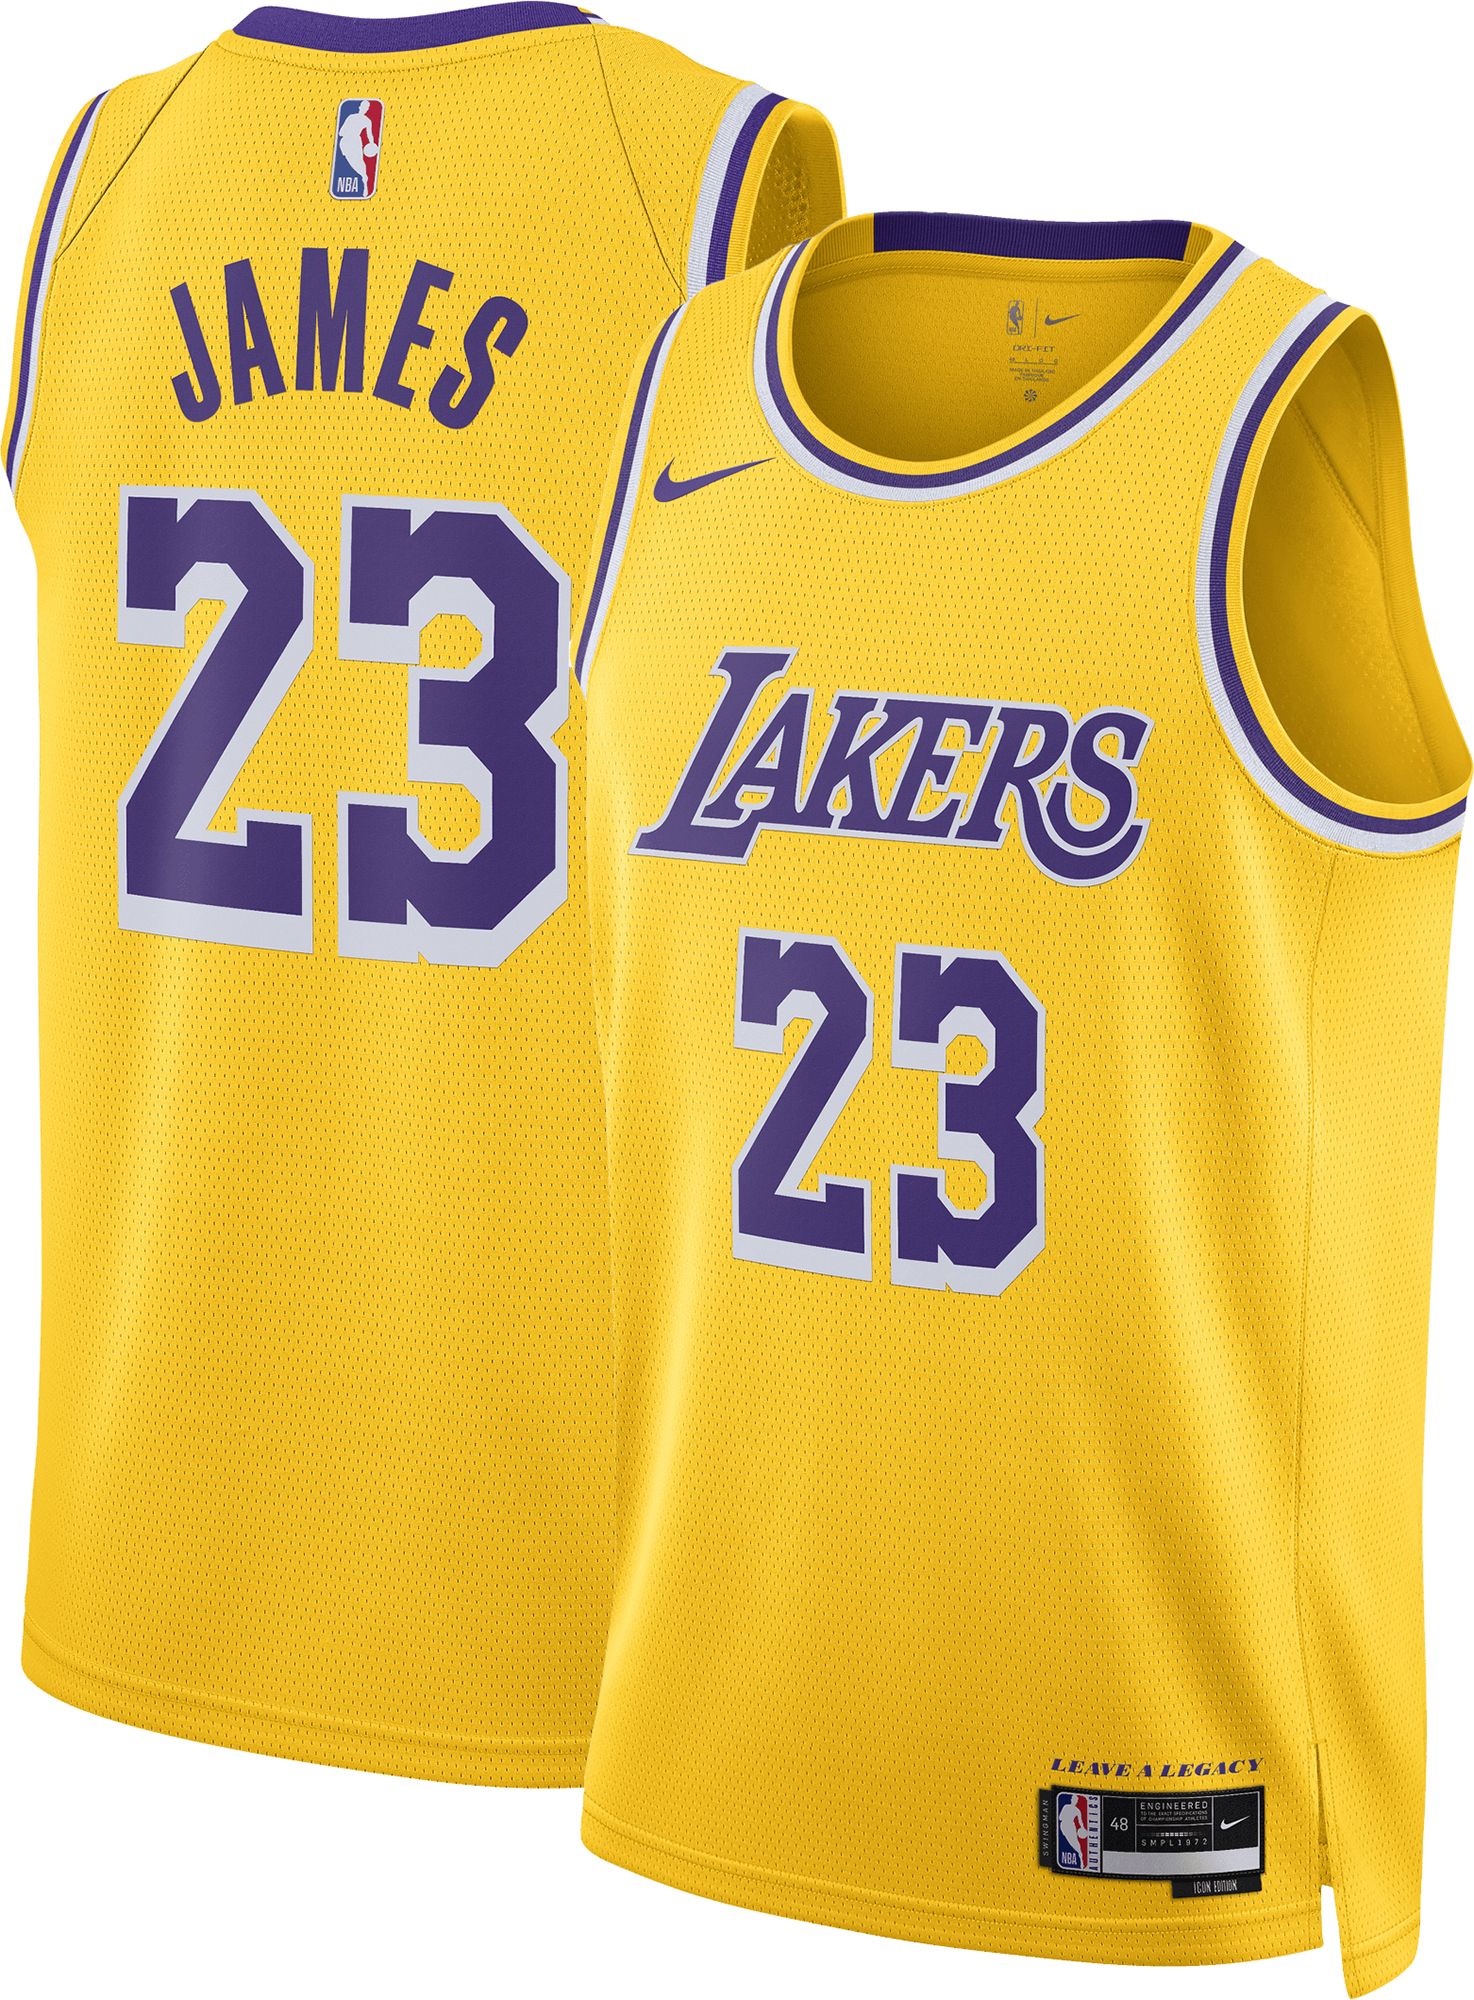 Lakers Jerseys for sale in West Farmington, Ohio